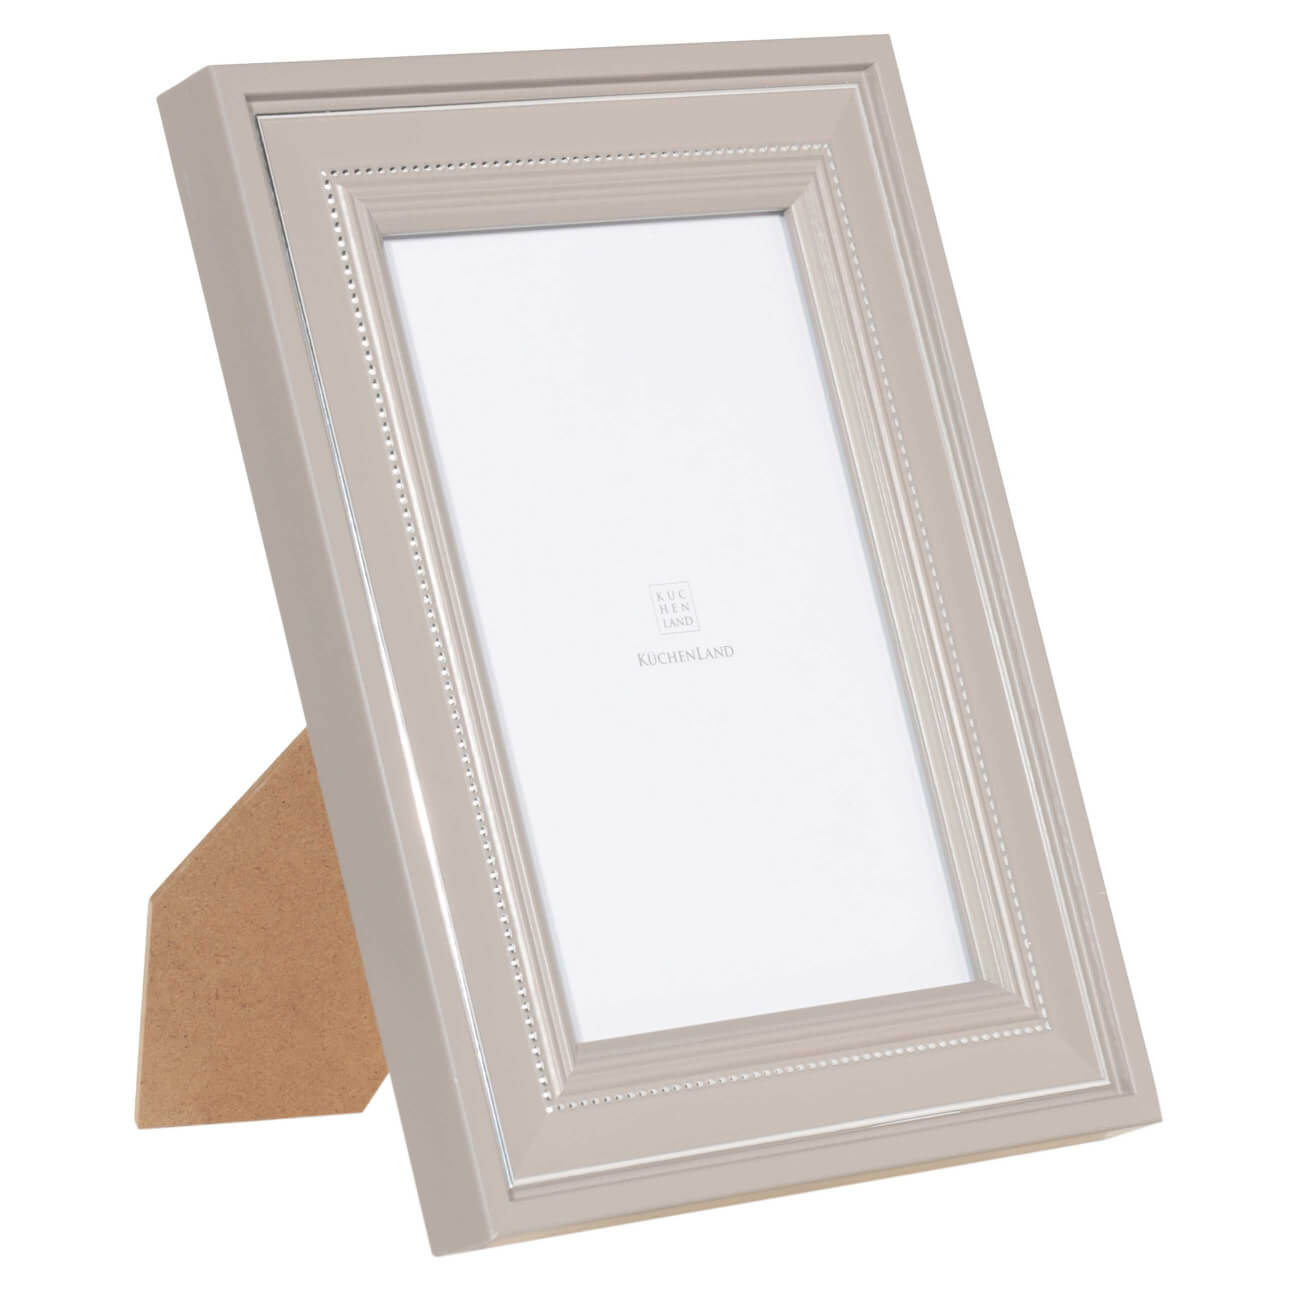 Photo frame, 20x15 cm, plastic / glass, gray, Leaves, Image изображение № 1